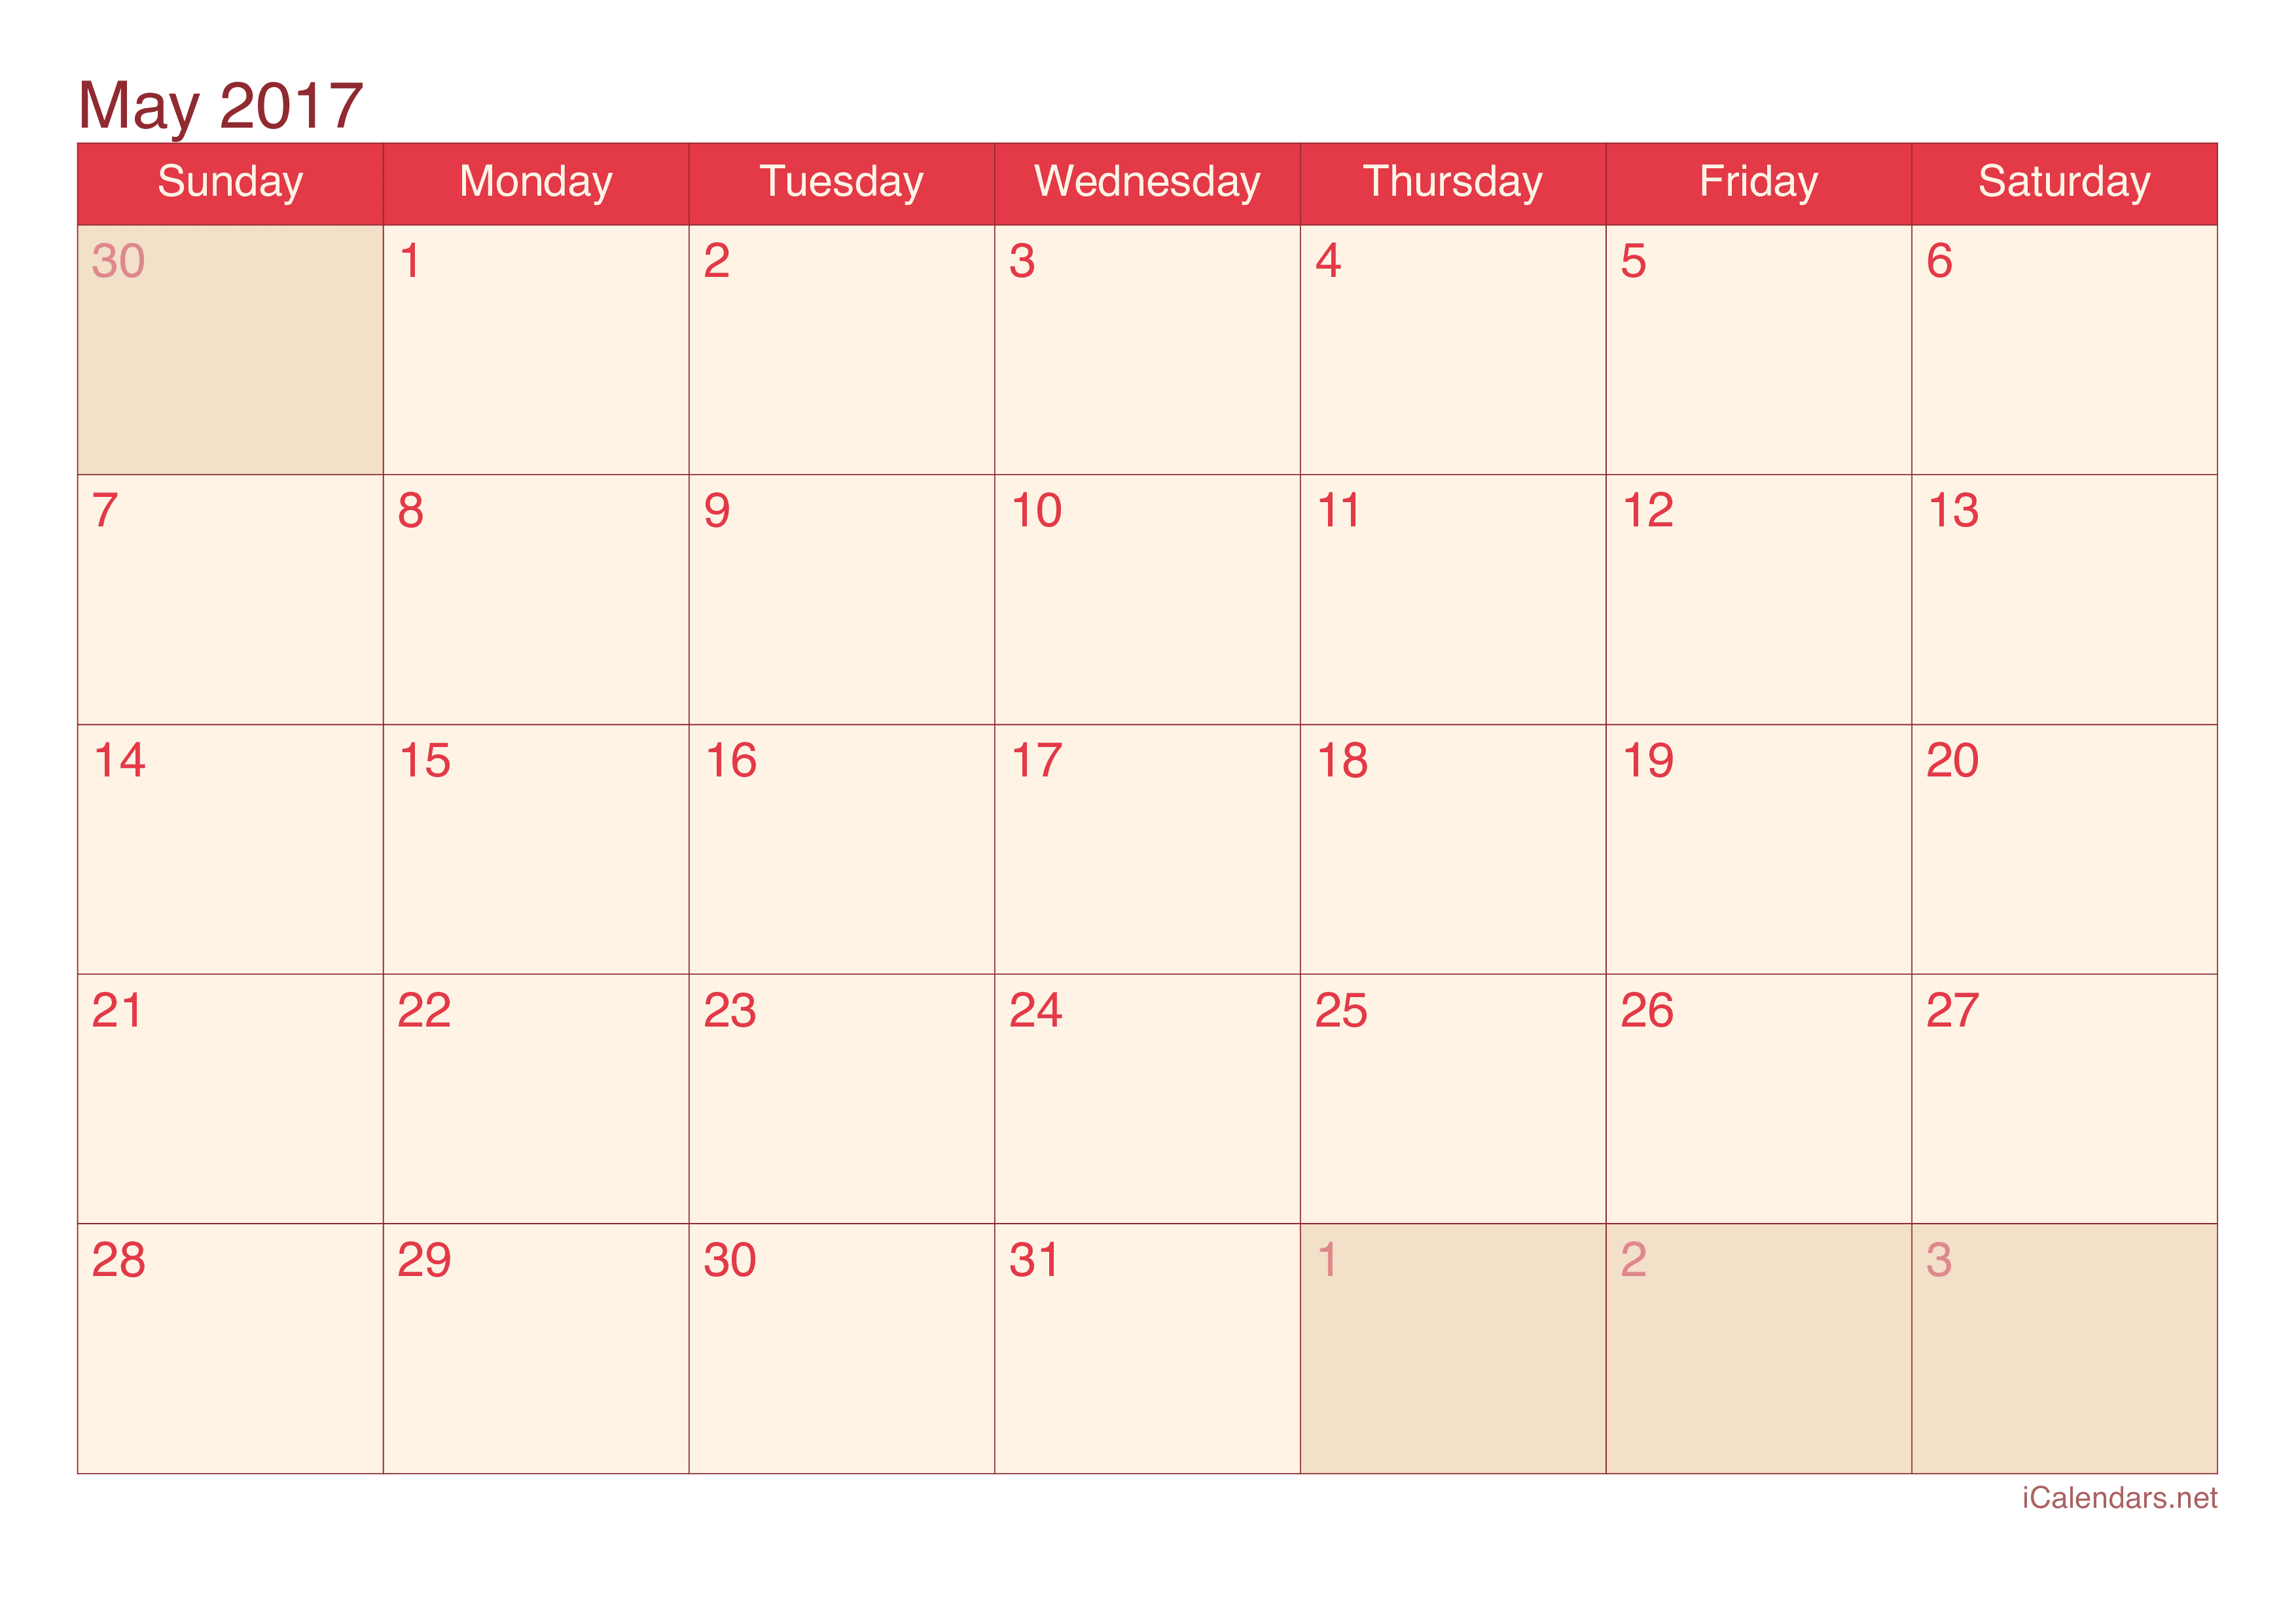 may-2017-printable-calendar-icalendars